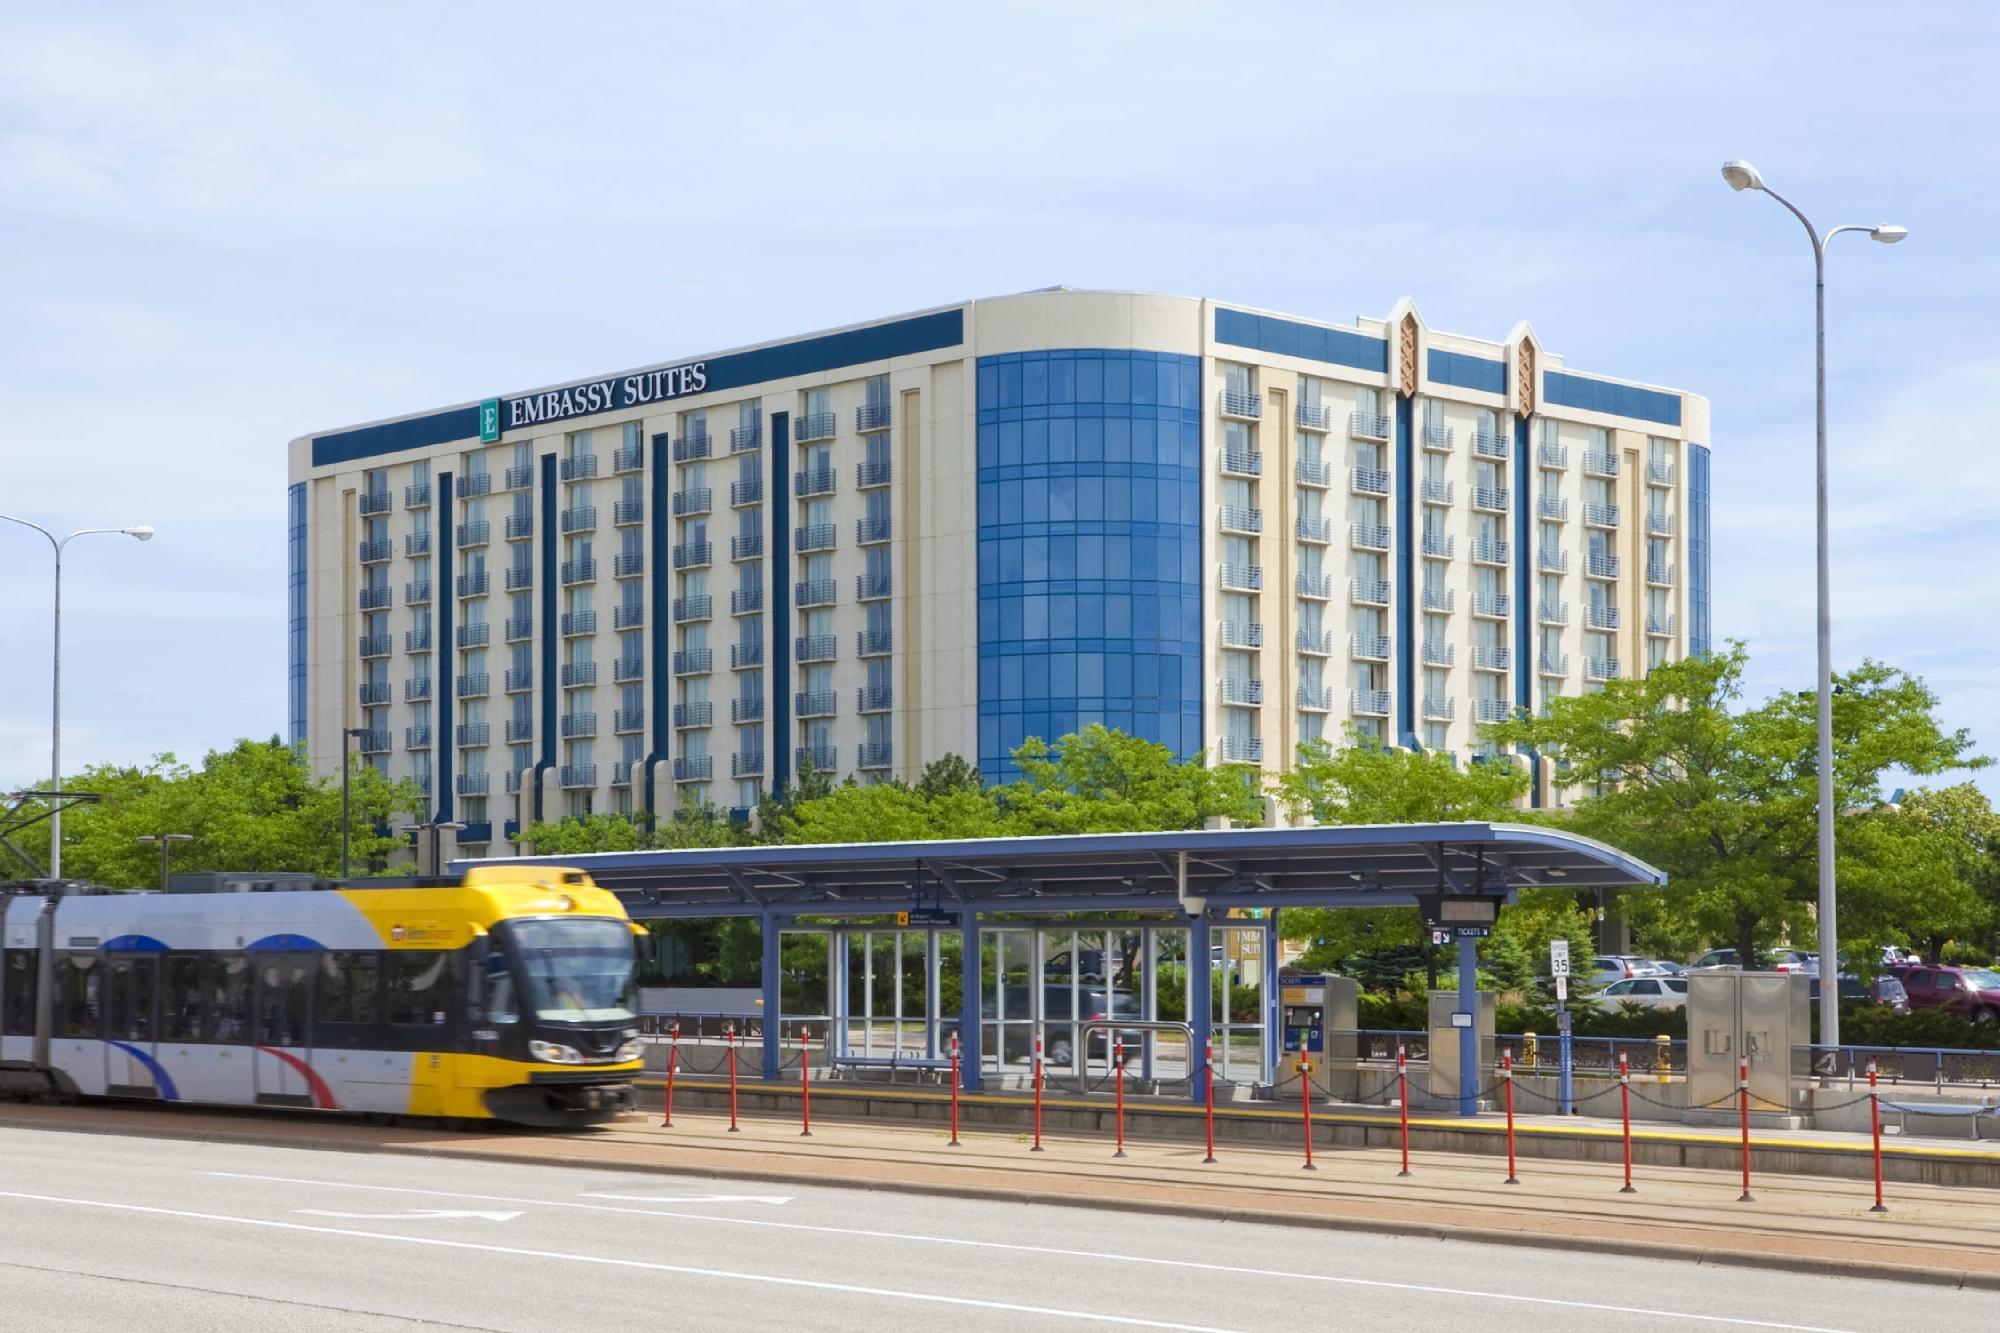 Photo of Embassy Suites by Hilton Minneapolis Airport, Minneapolis, MN